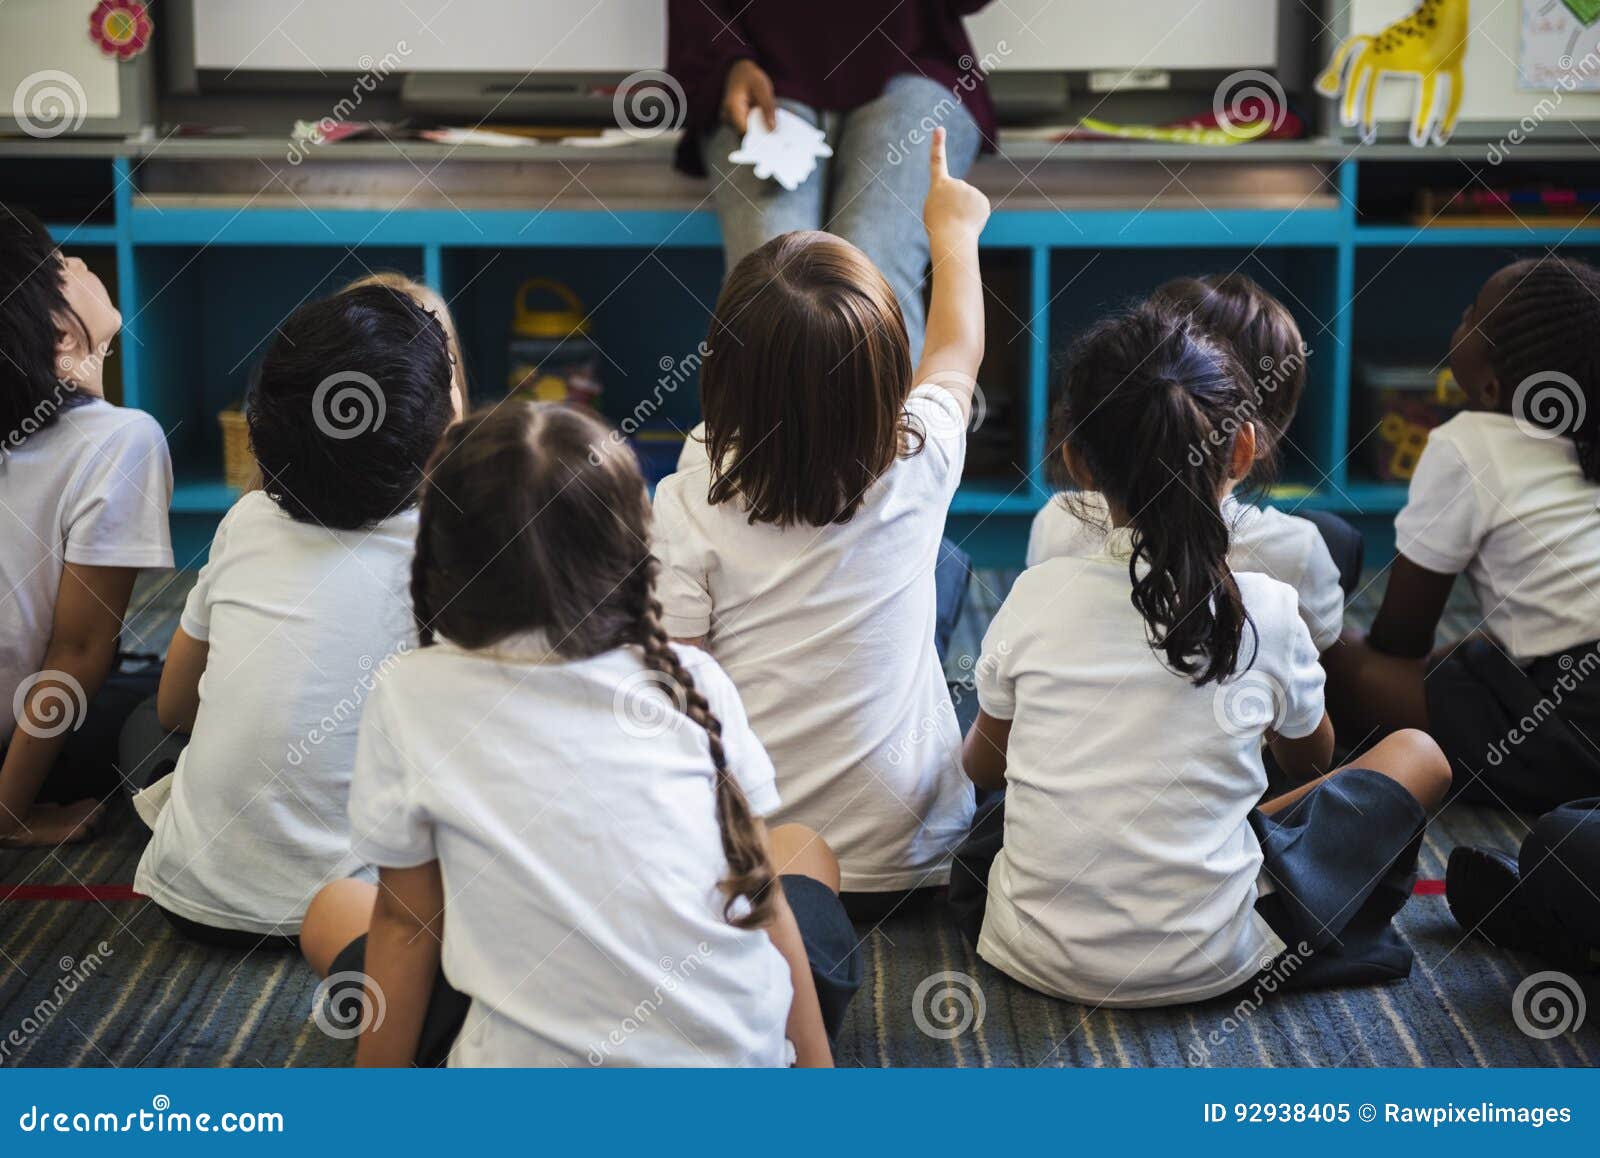 Kindergarten Students Sitting On The Floor Stock Image Image Of